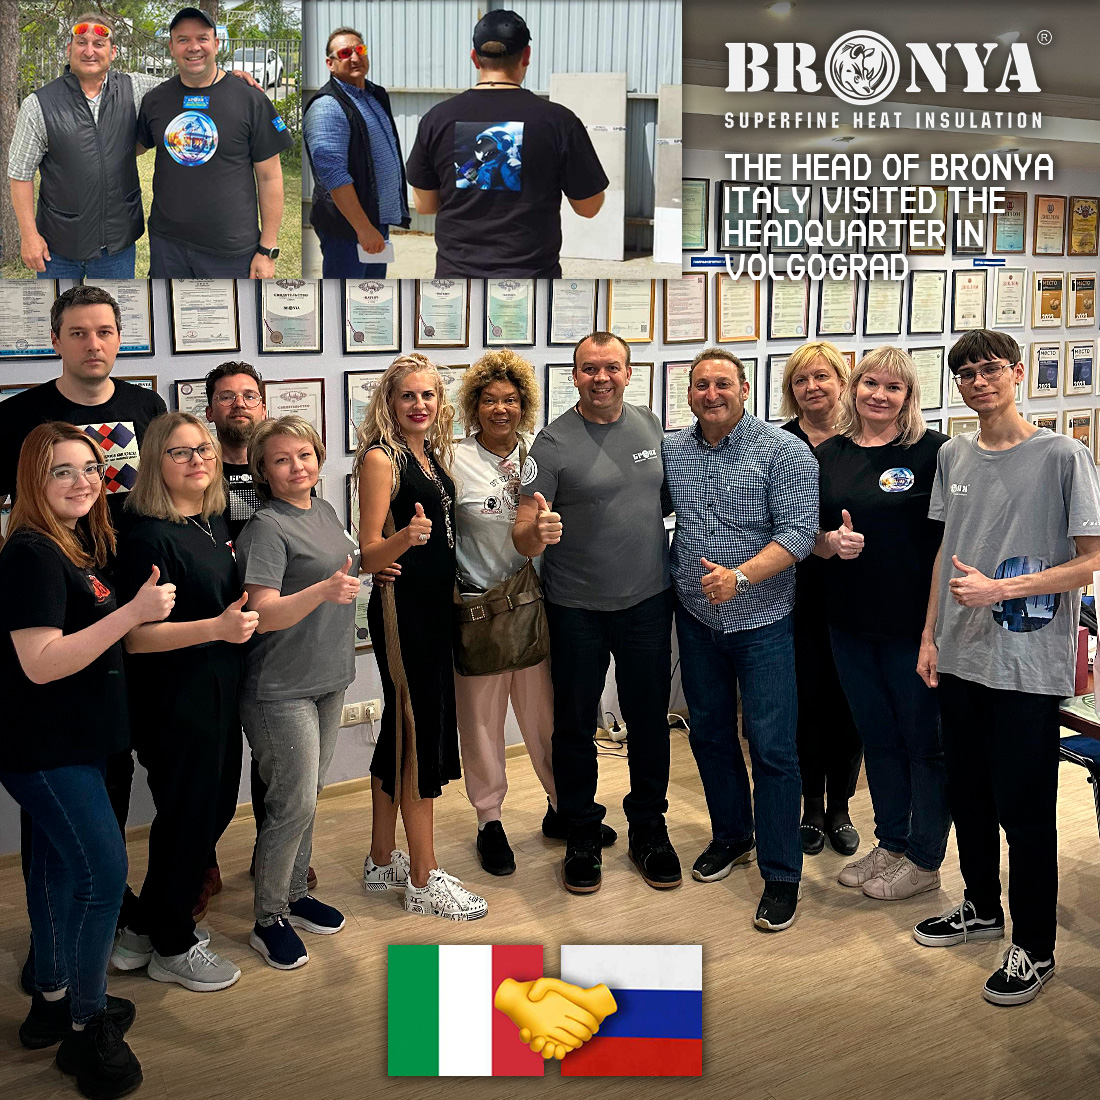 The head of Bronya Italy visited the headquarter in Volgograd (photo)